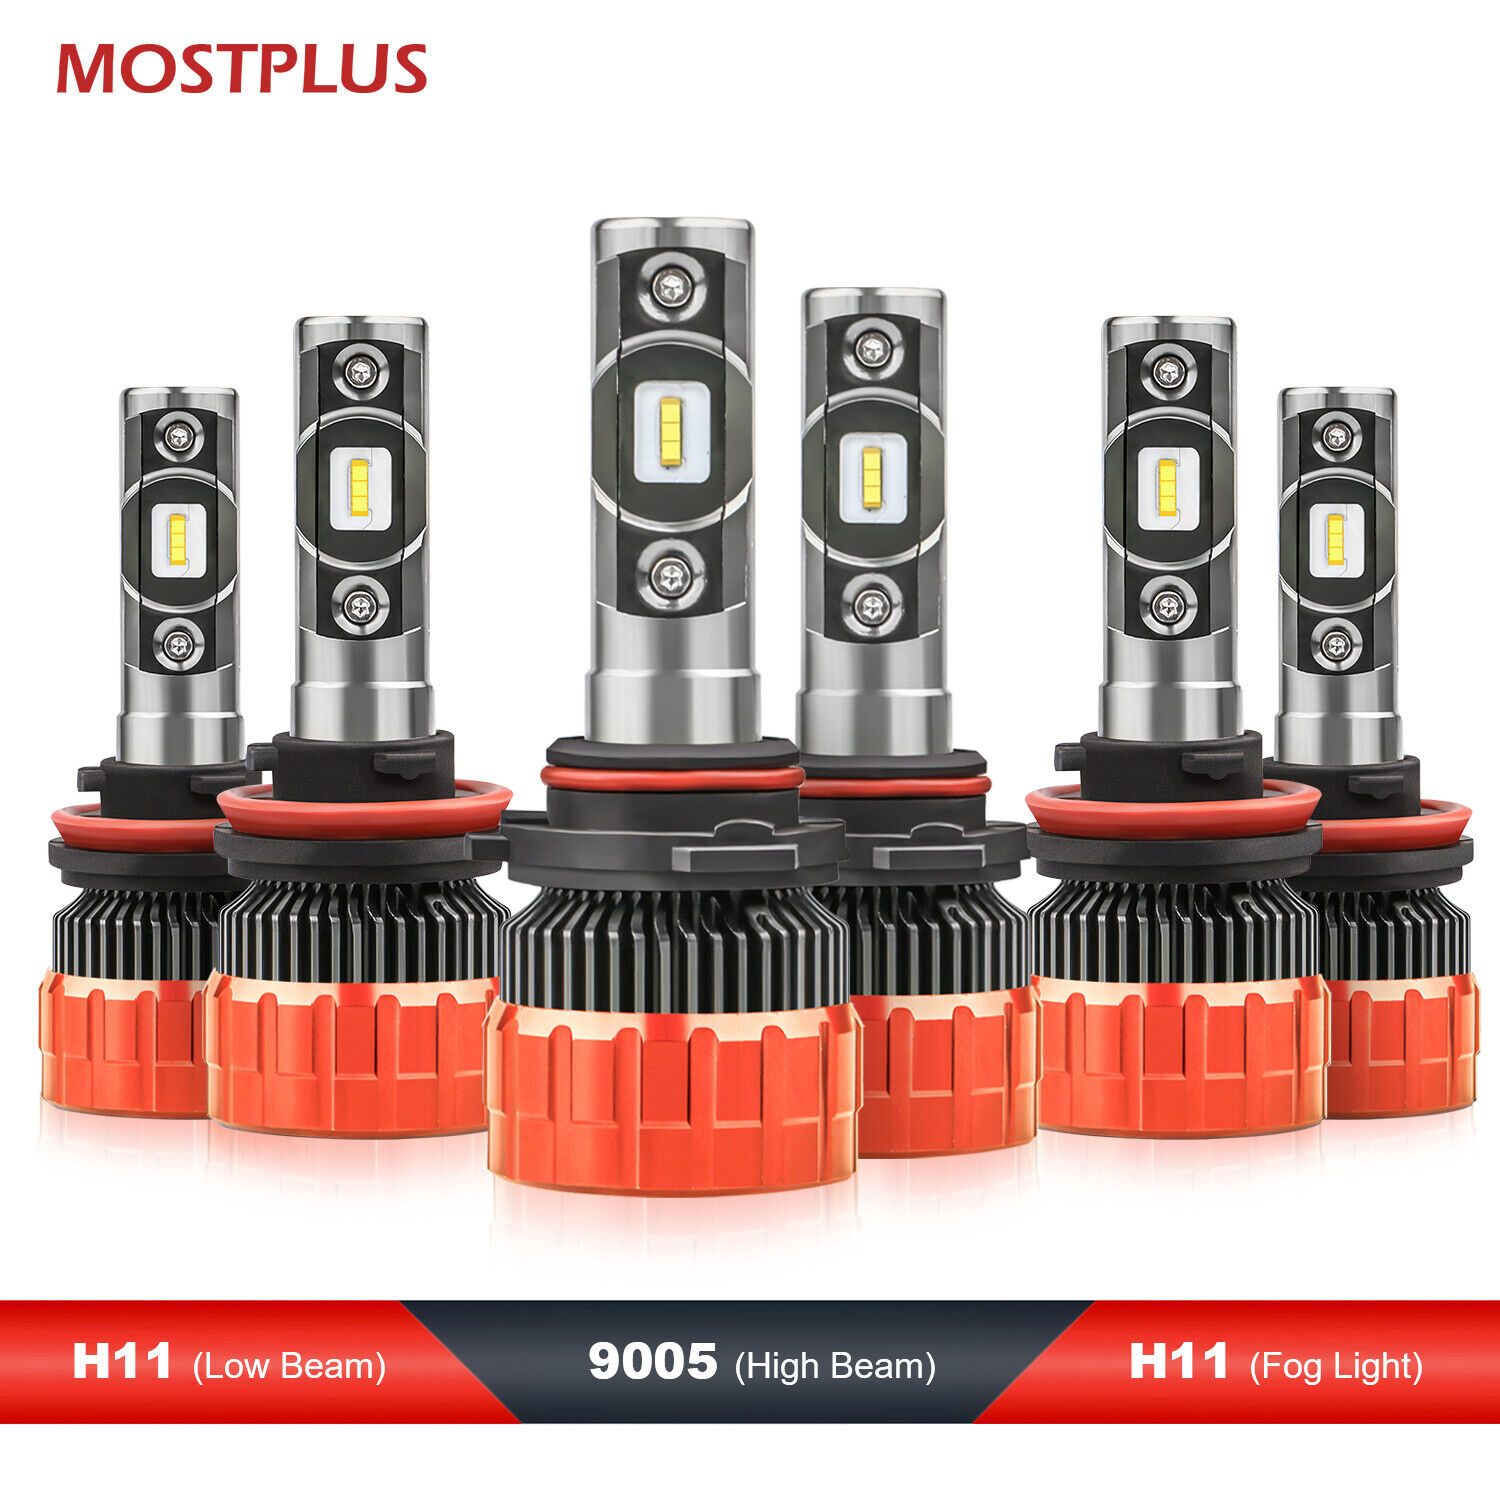 9005+H11+H11 MOSTPLUS Focused LED Headlight Hi/Lo Beams+Fog Light  White Color